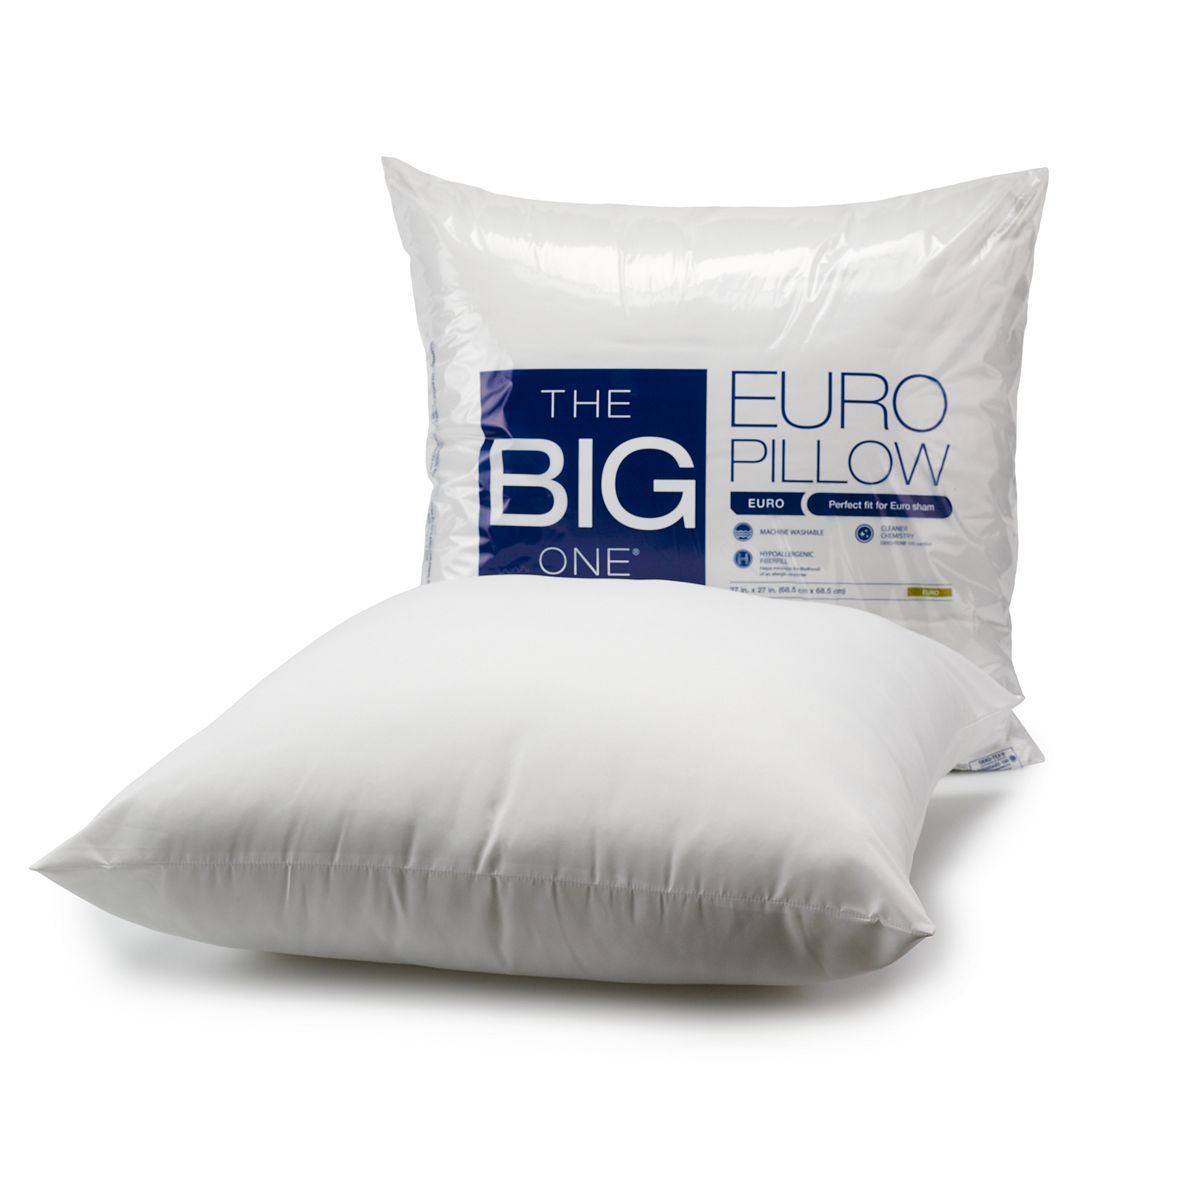 The Big One® Microfiber Pillow